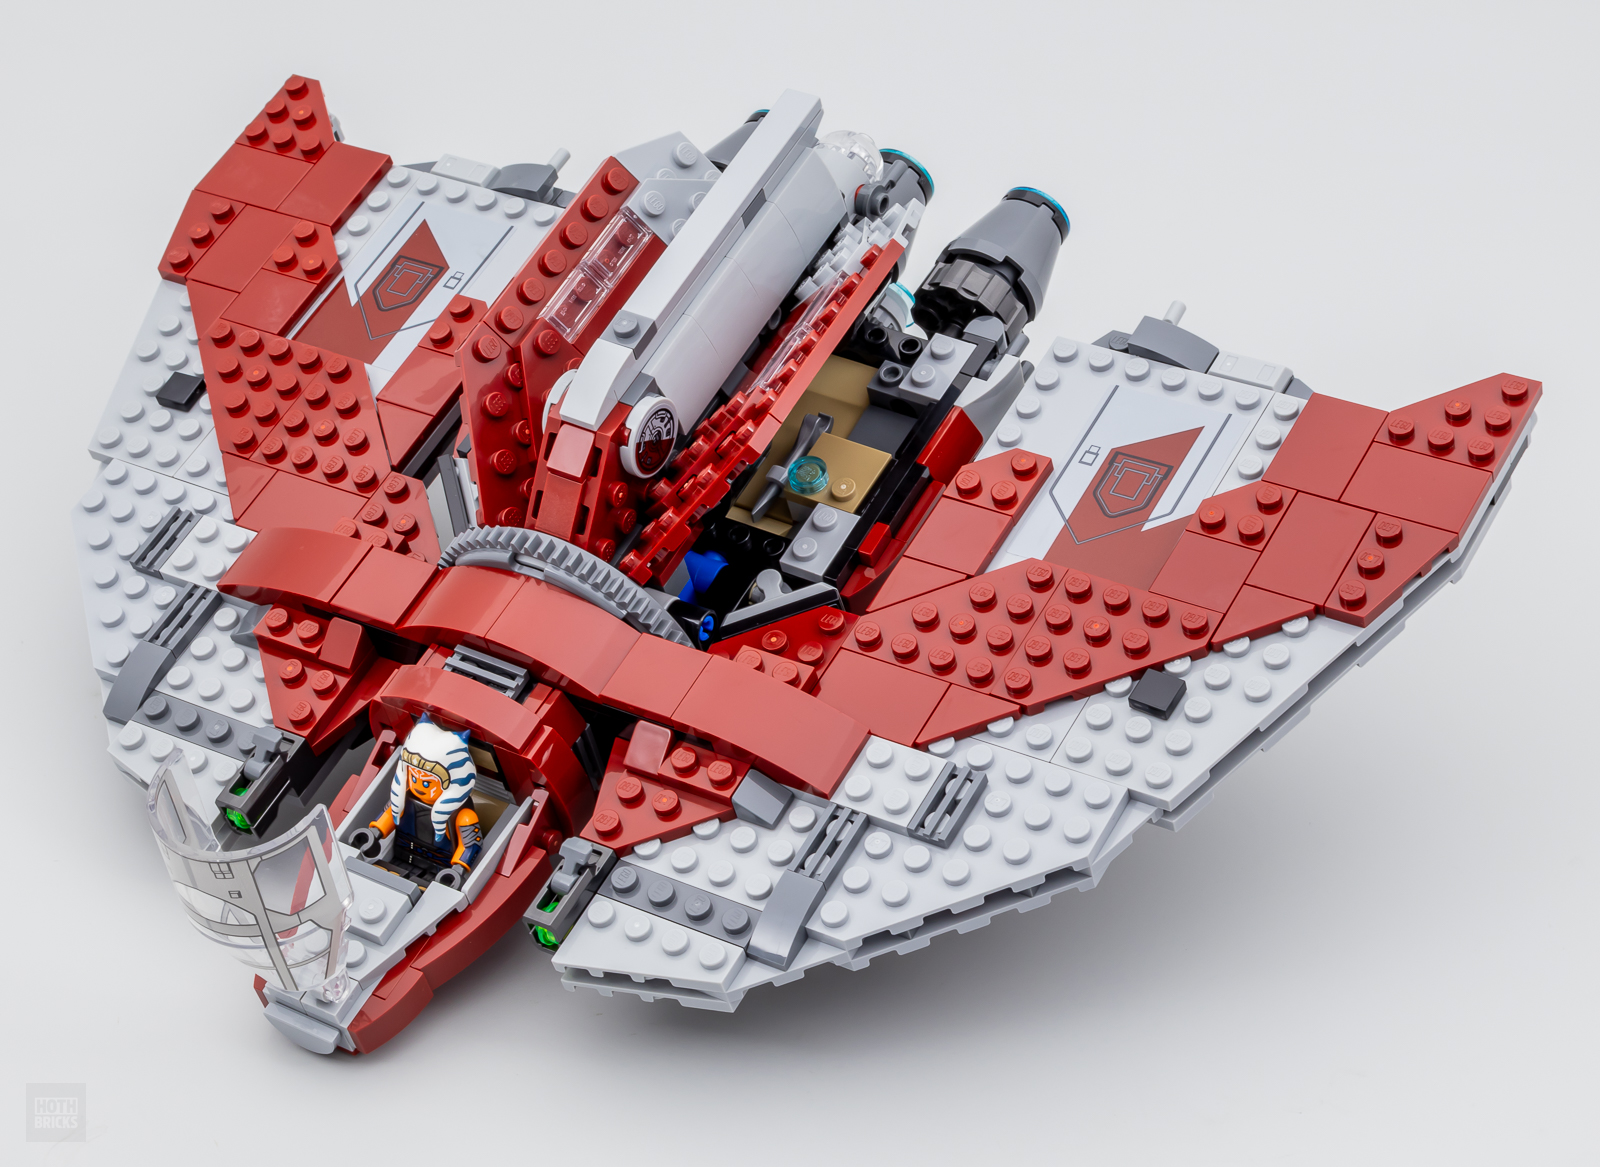 LEGO Star Wars Ahsoka Tano's T-6 Jedi Shuttle 75362 review